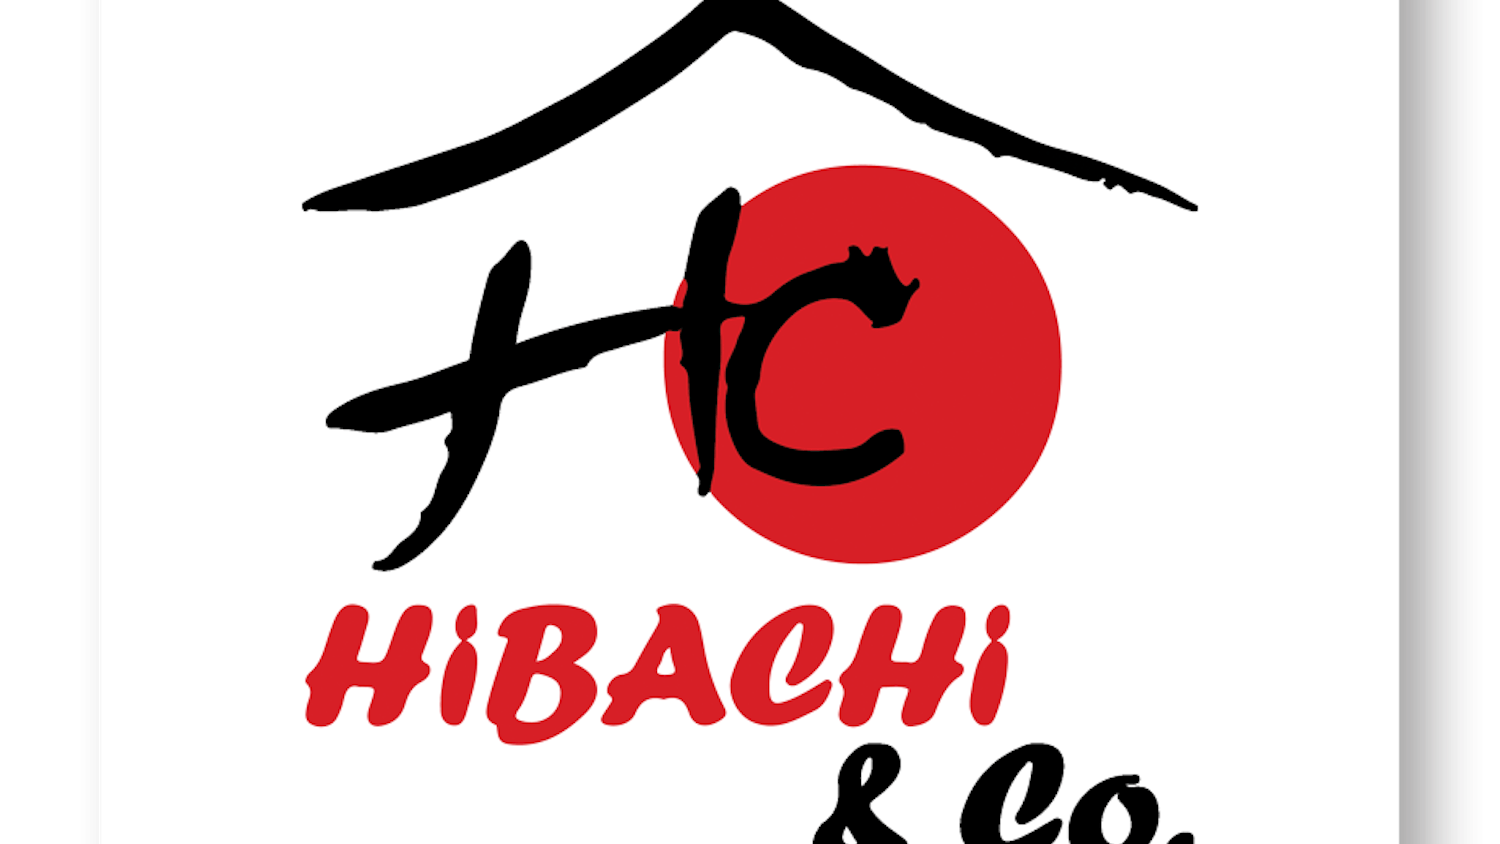 Hibachi & Co .png